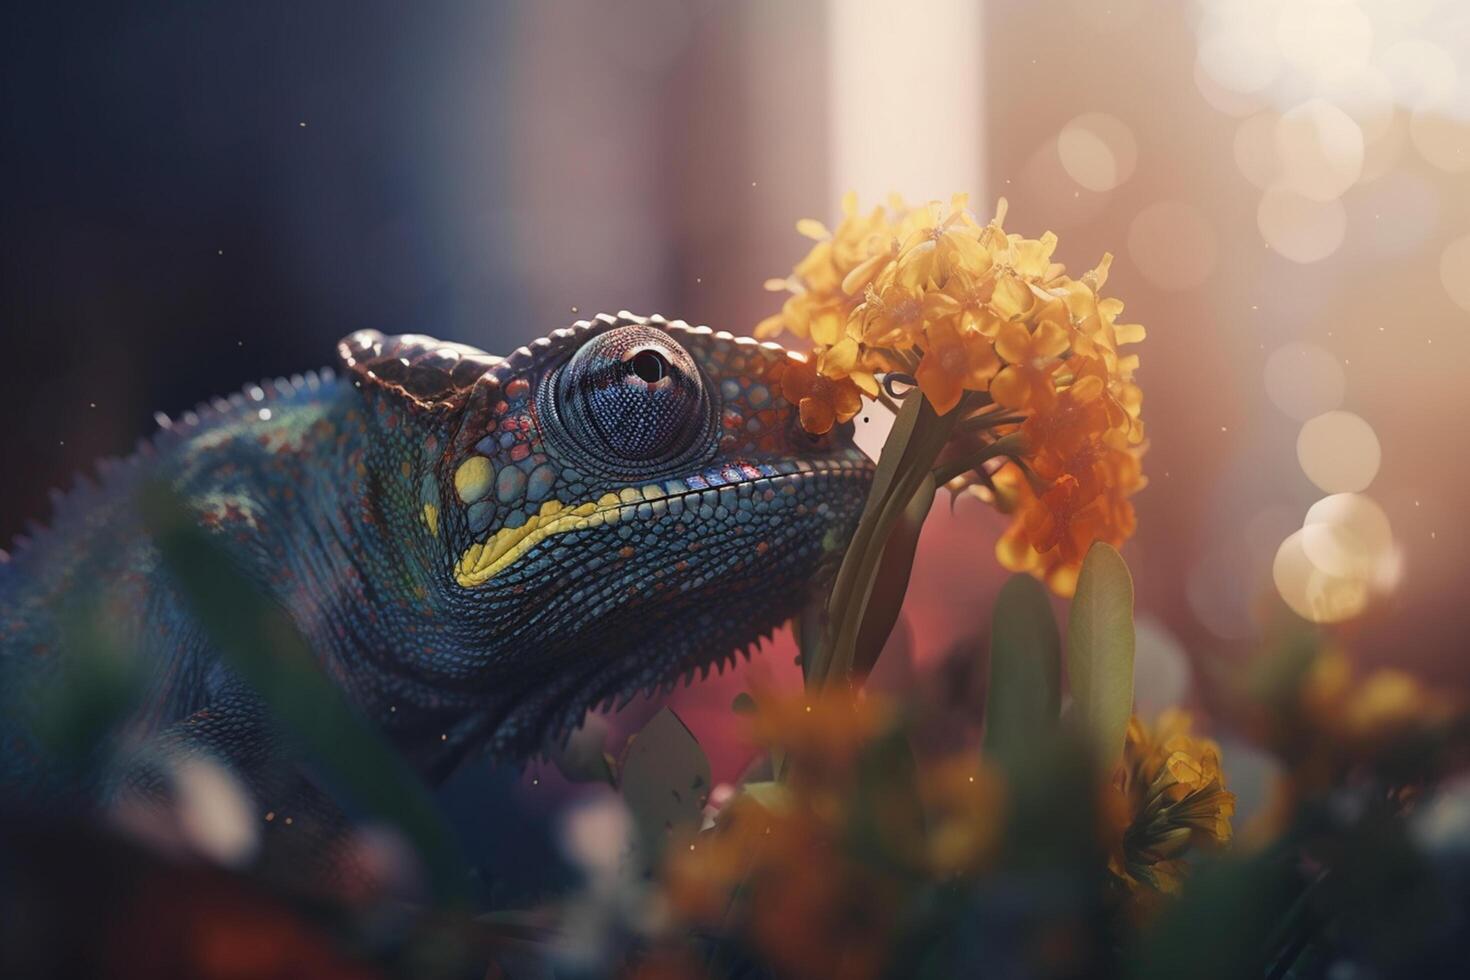 Colorful chameleon resting among vibrant flowers photo